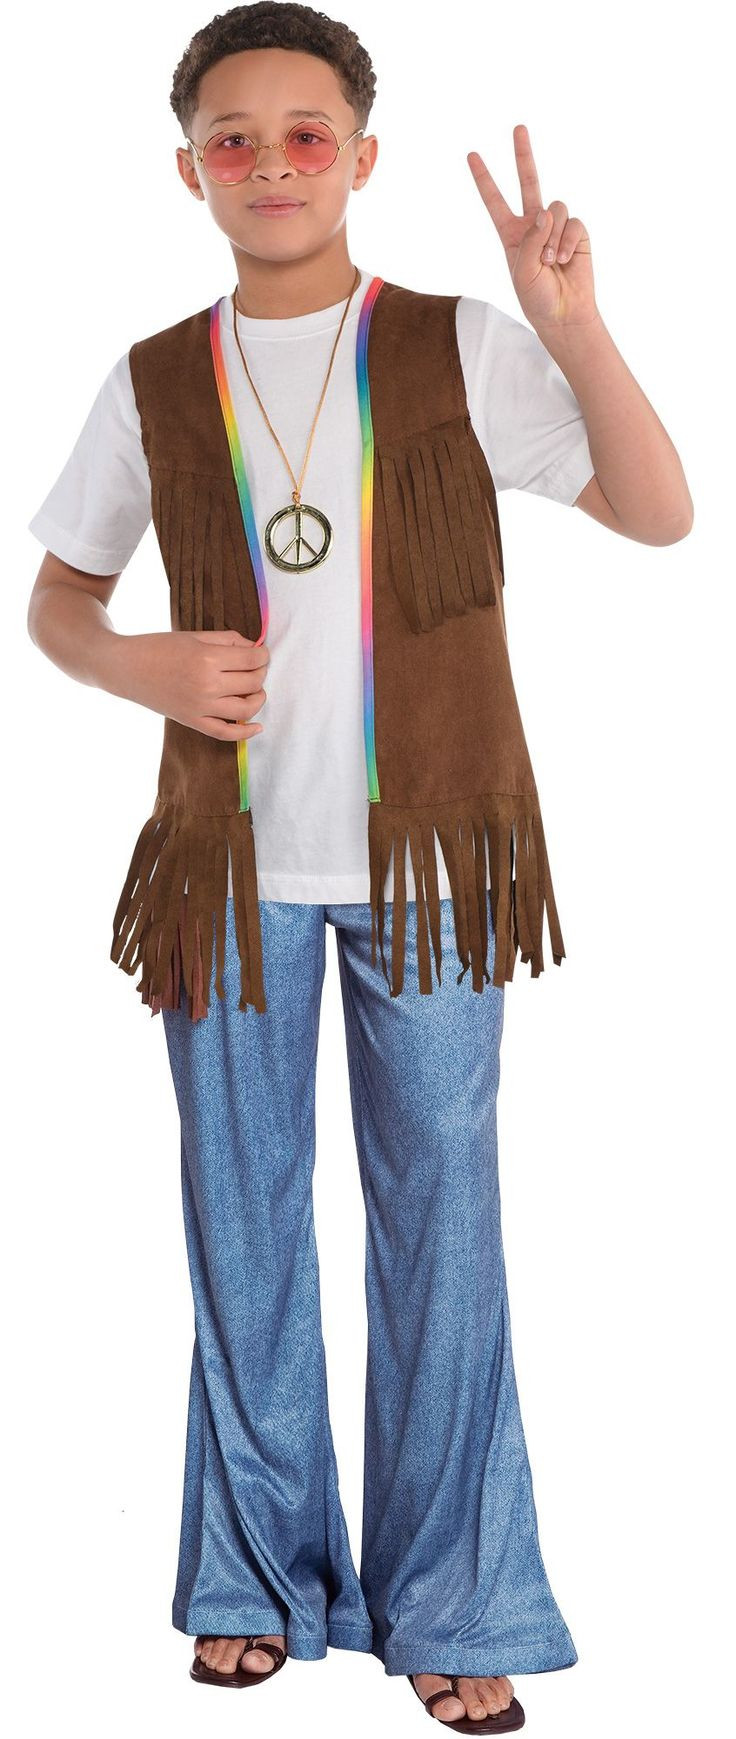 DIY Hippie Costume
 DIY Hippie costume for H Pinterest